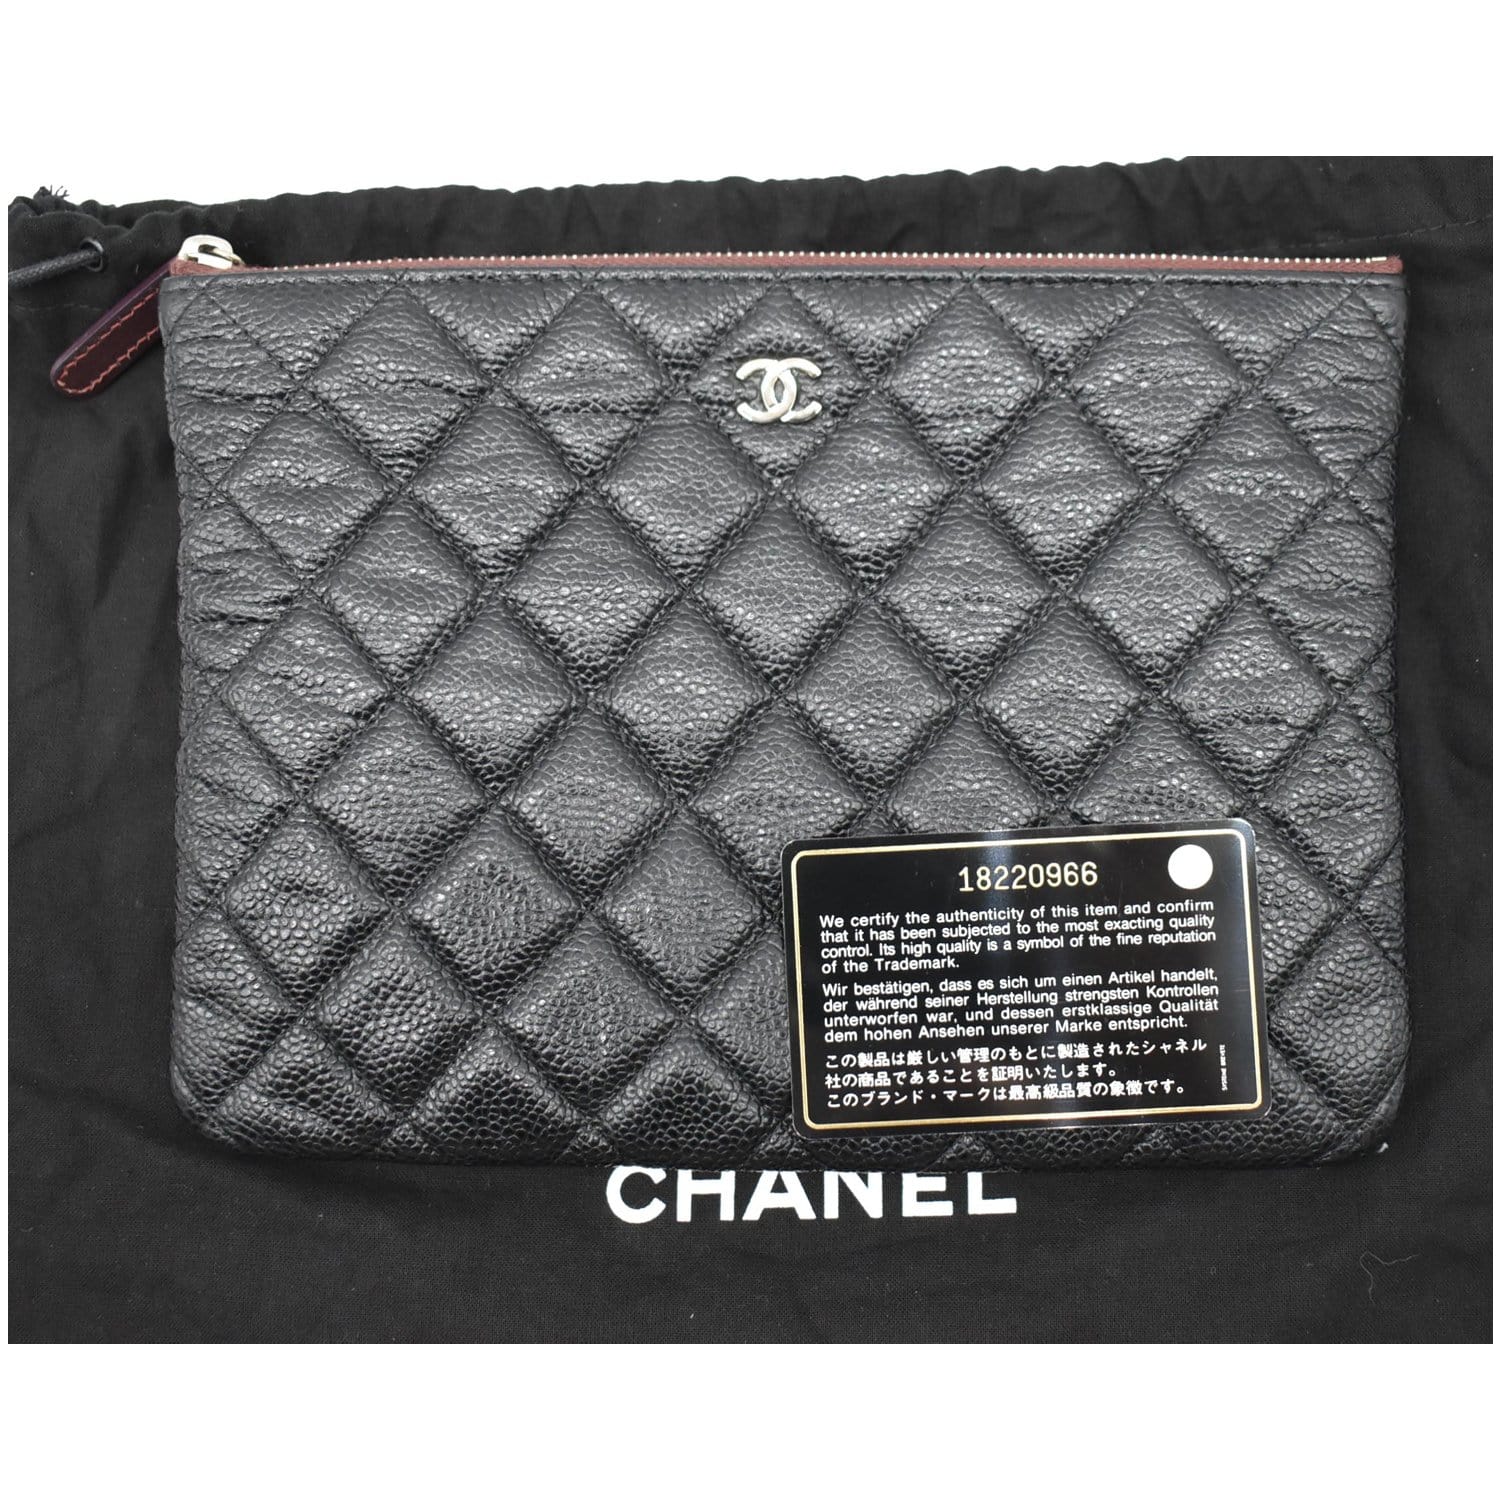 Chanel fabulous new SLG Black caviar O case & Clutch review! 